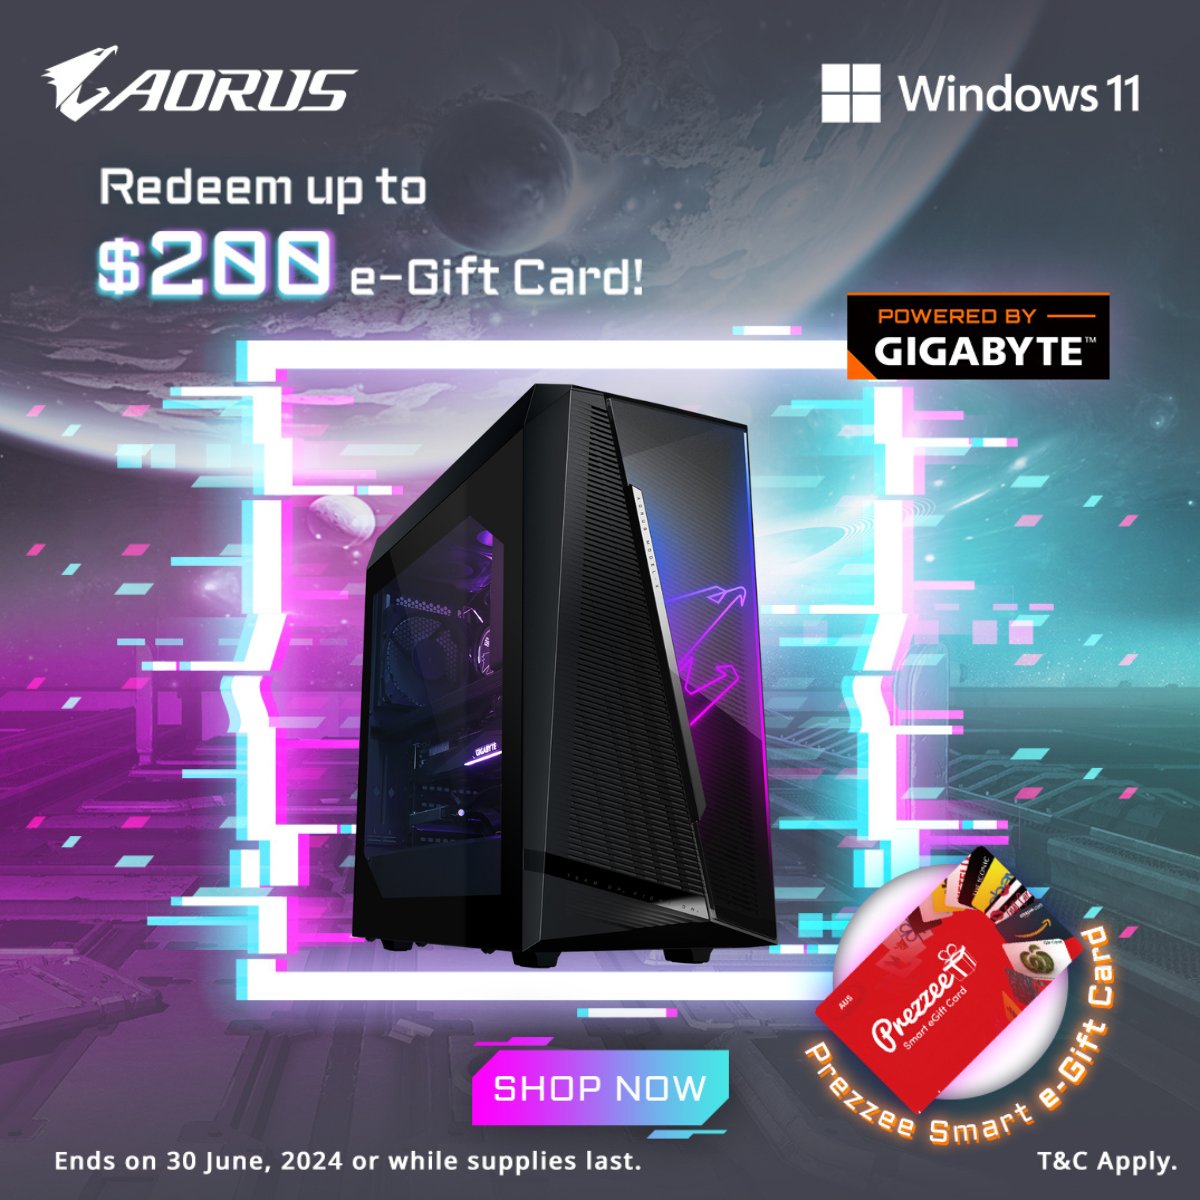 Buy a Selected GIGABYTE PC and redeem up to a $200 e-Gift Card now!🤩 Event Details: aorus.com/en-au/explore/…